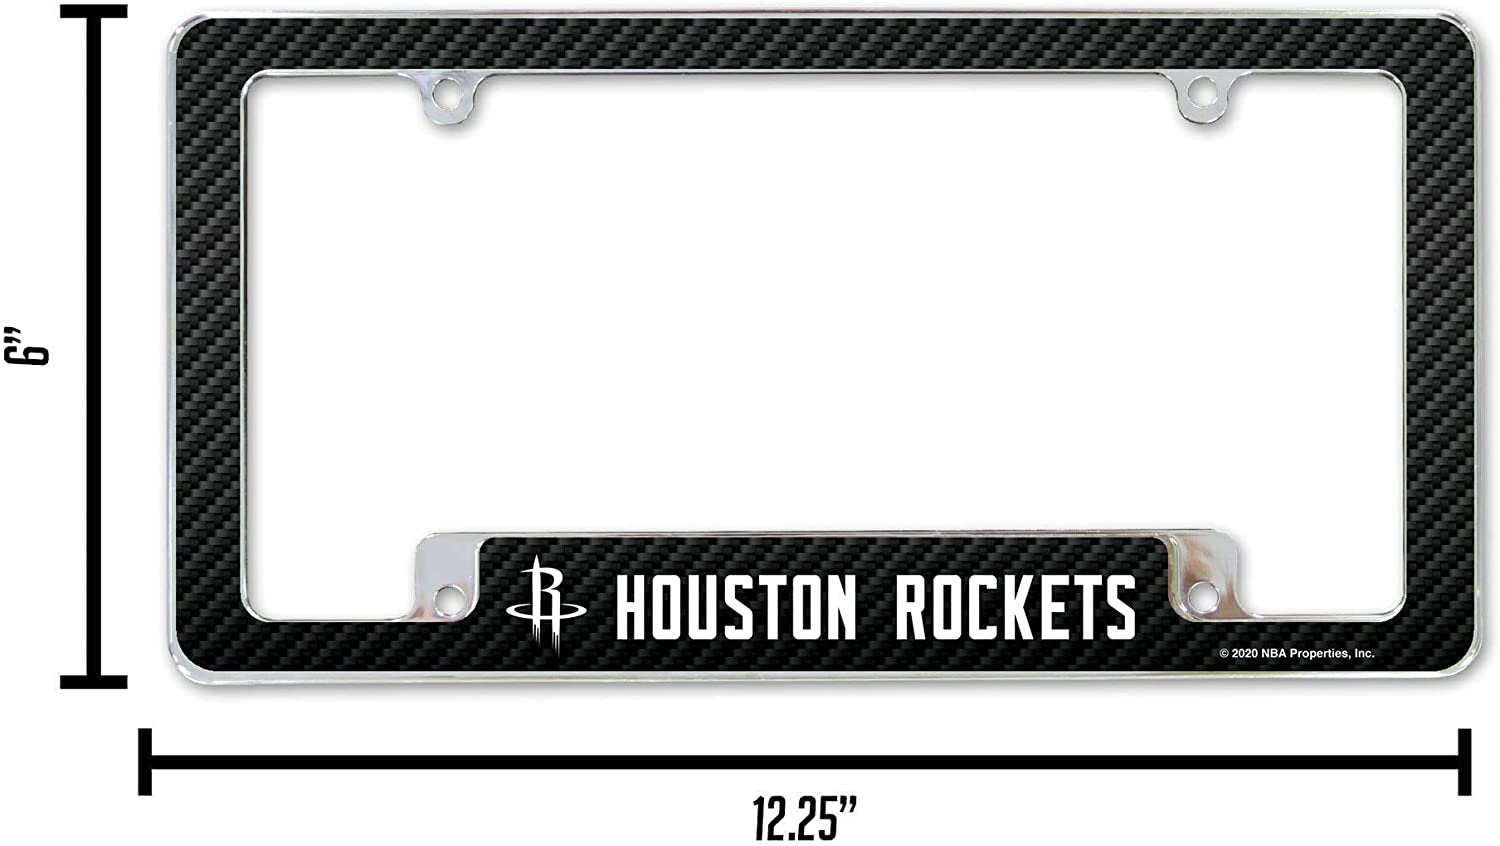 Houston Rockets Metal License Plate Frame Chrome Tag Cover Carbon Fiber Design 6x12 Inch